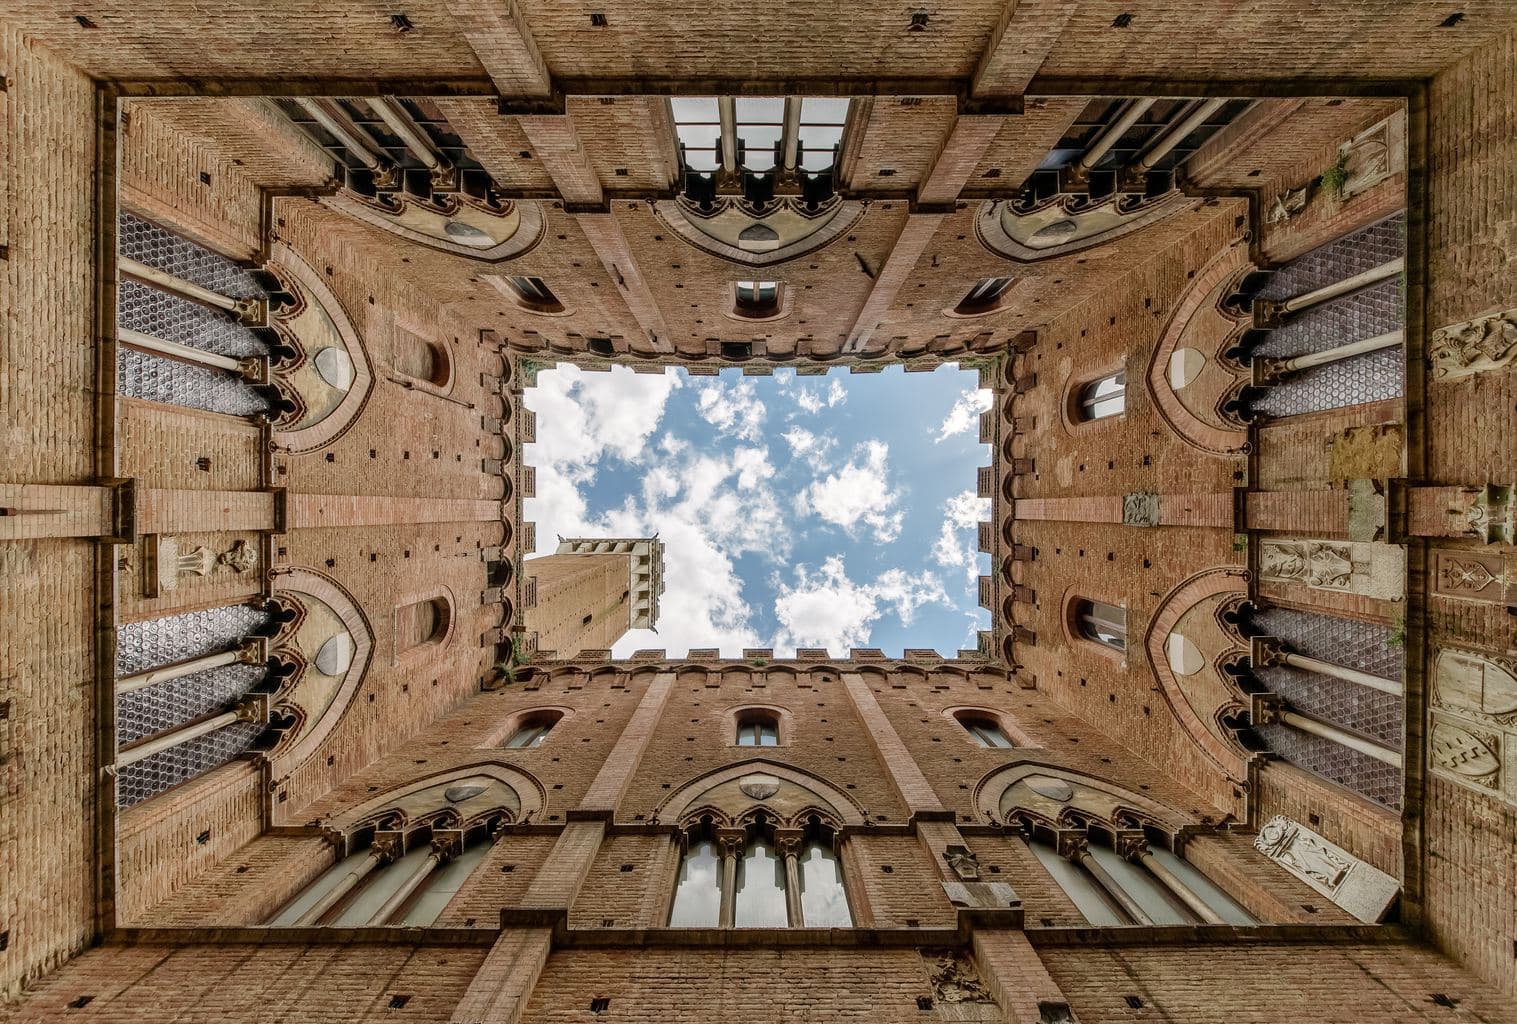 "Siena Photo by Matteo Kutufa on Unsplash"